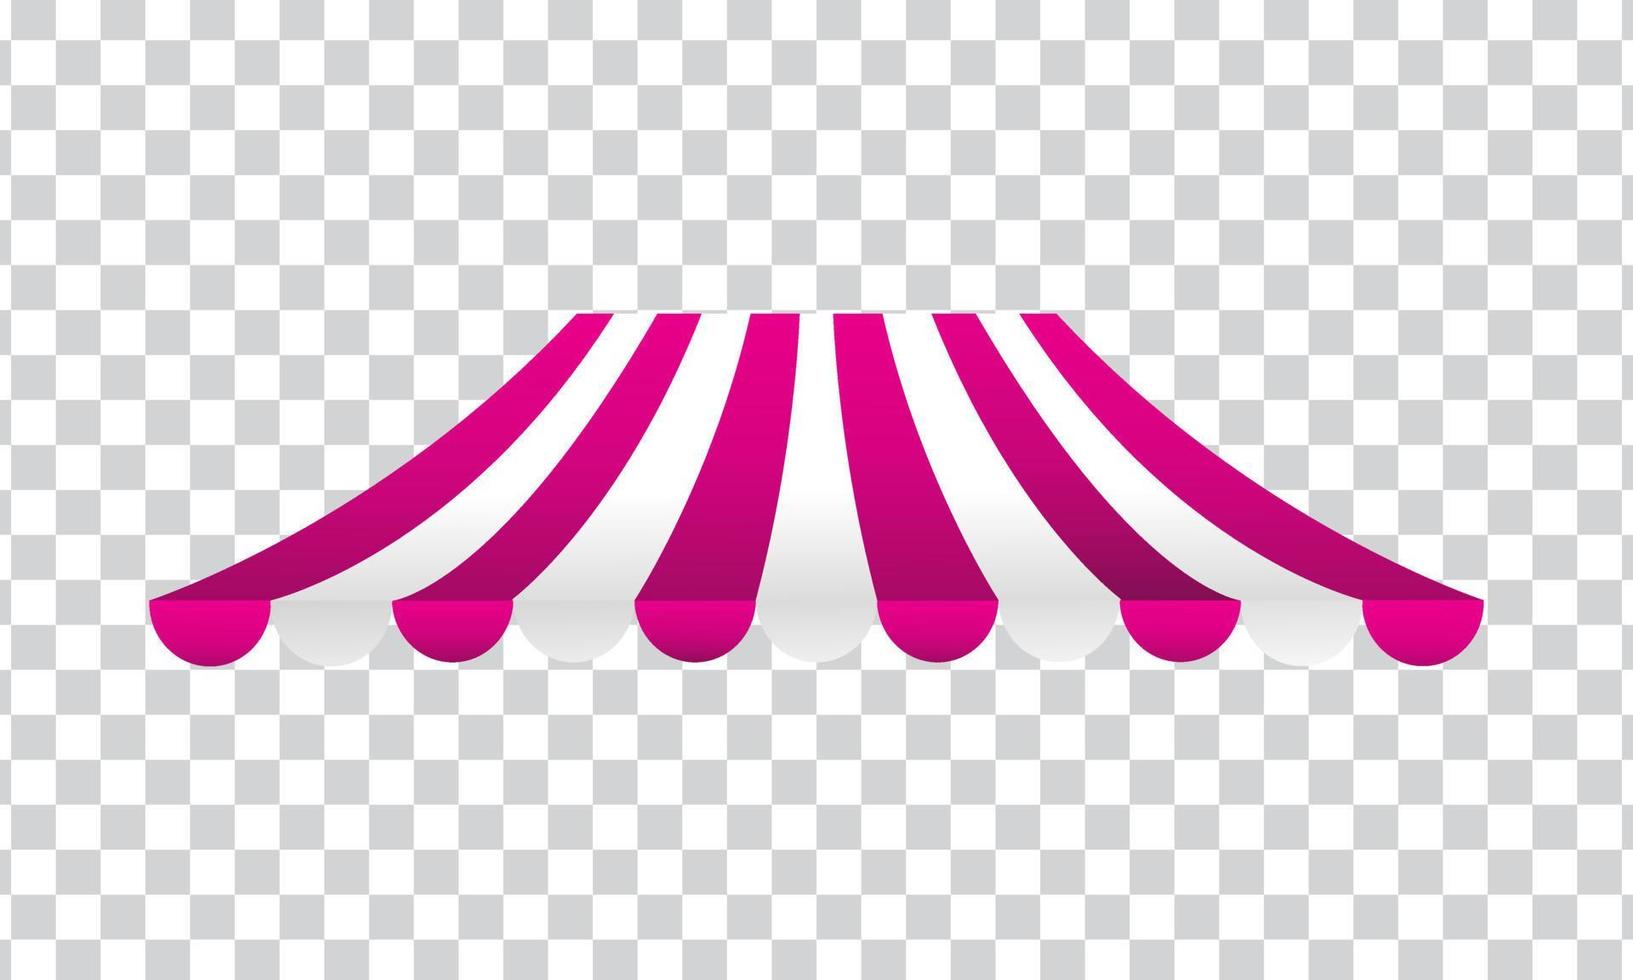 unika 3d butik baldakin rosa butik ikon isolerad på vektor